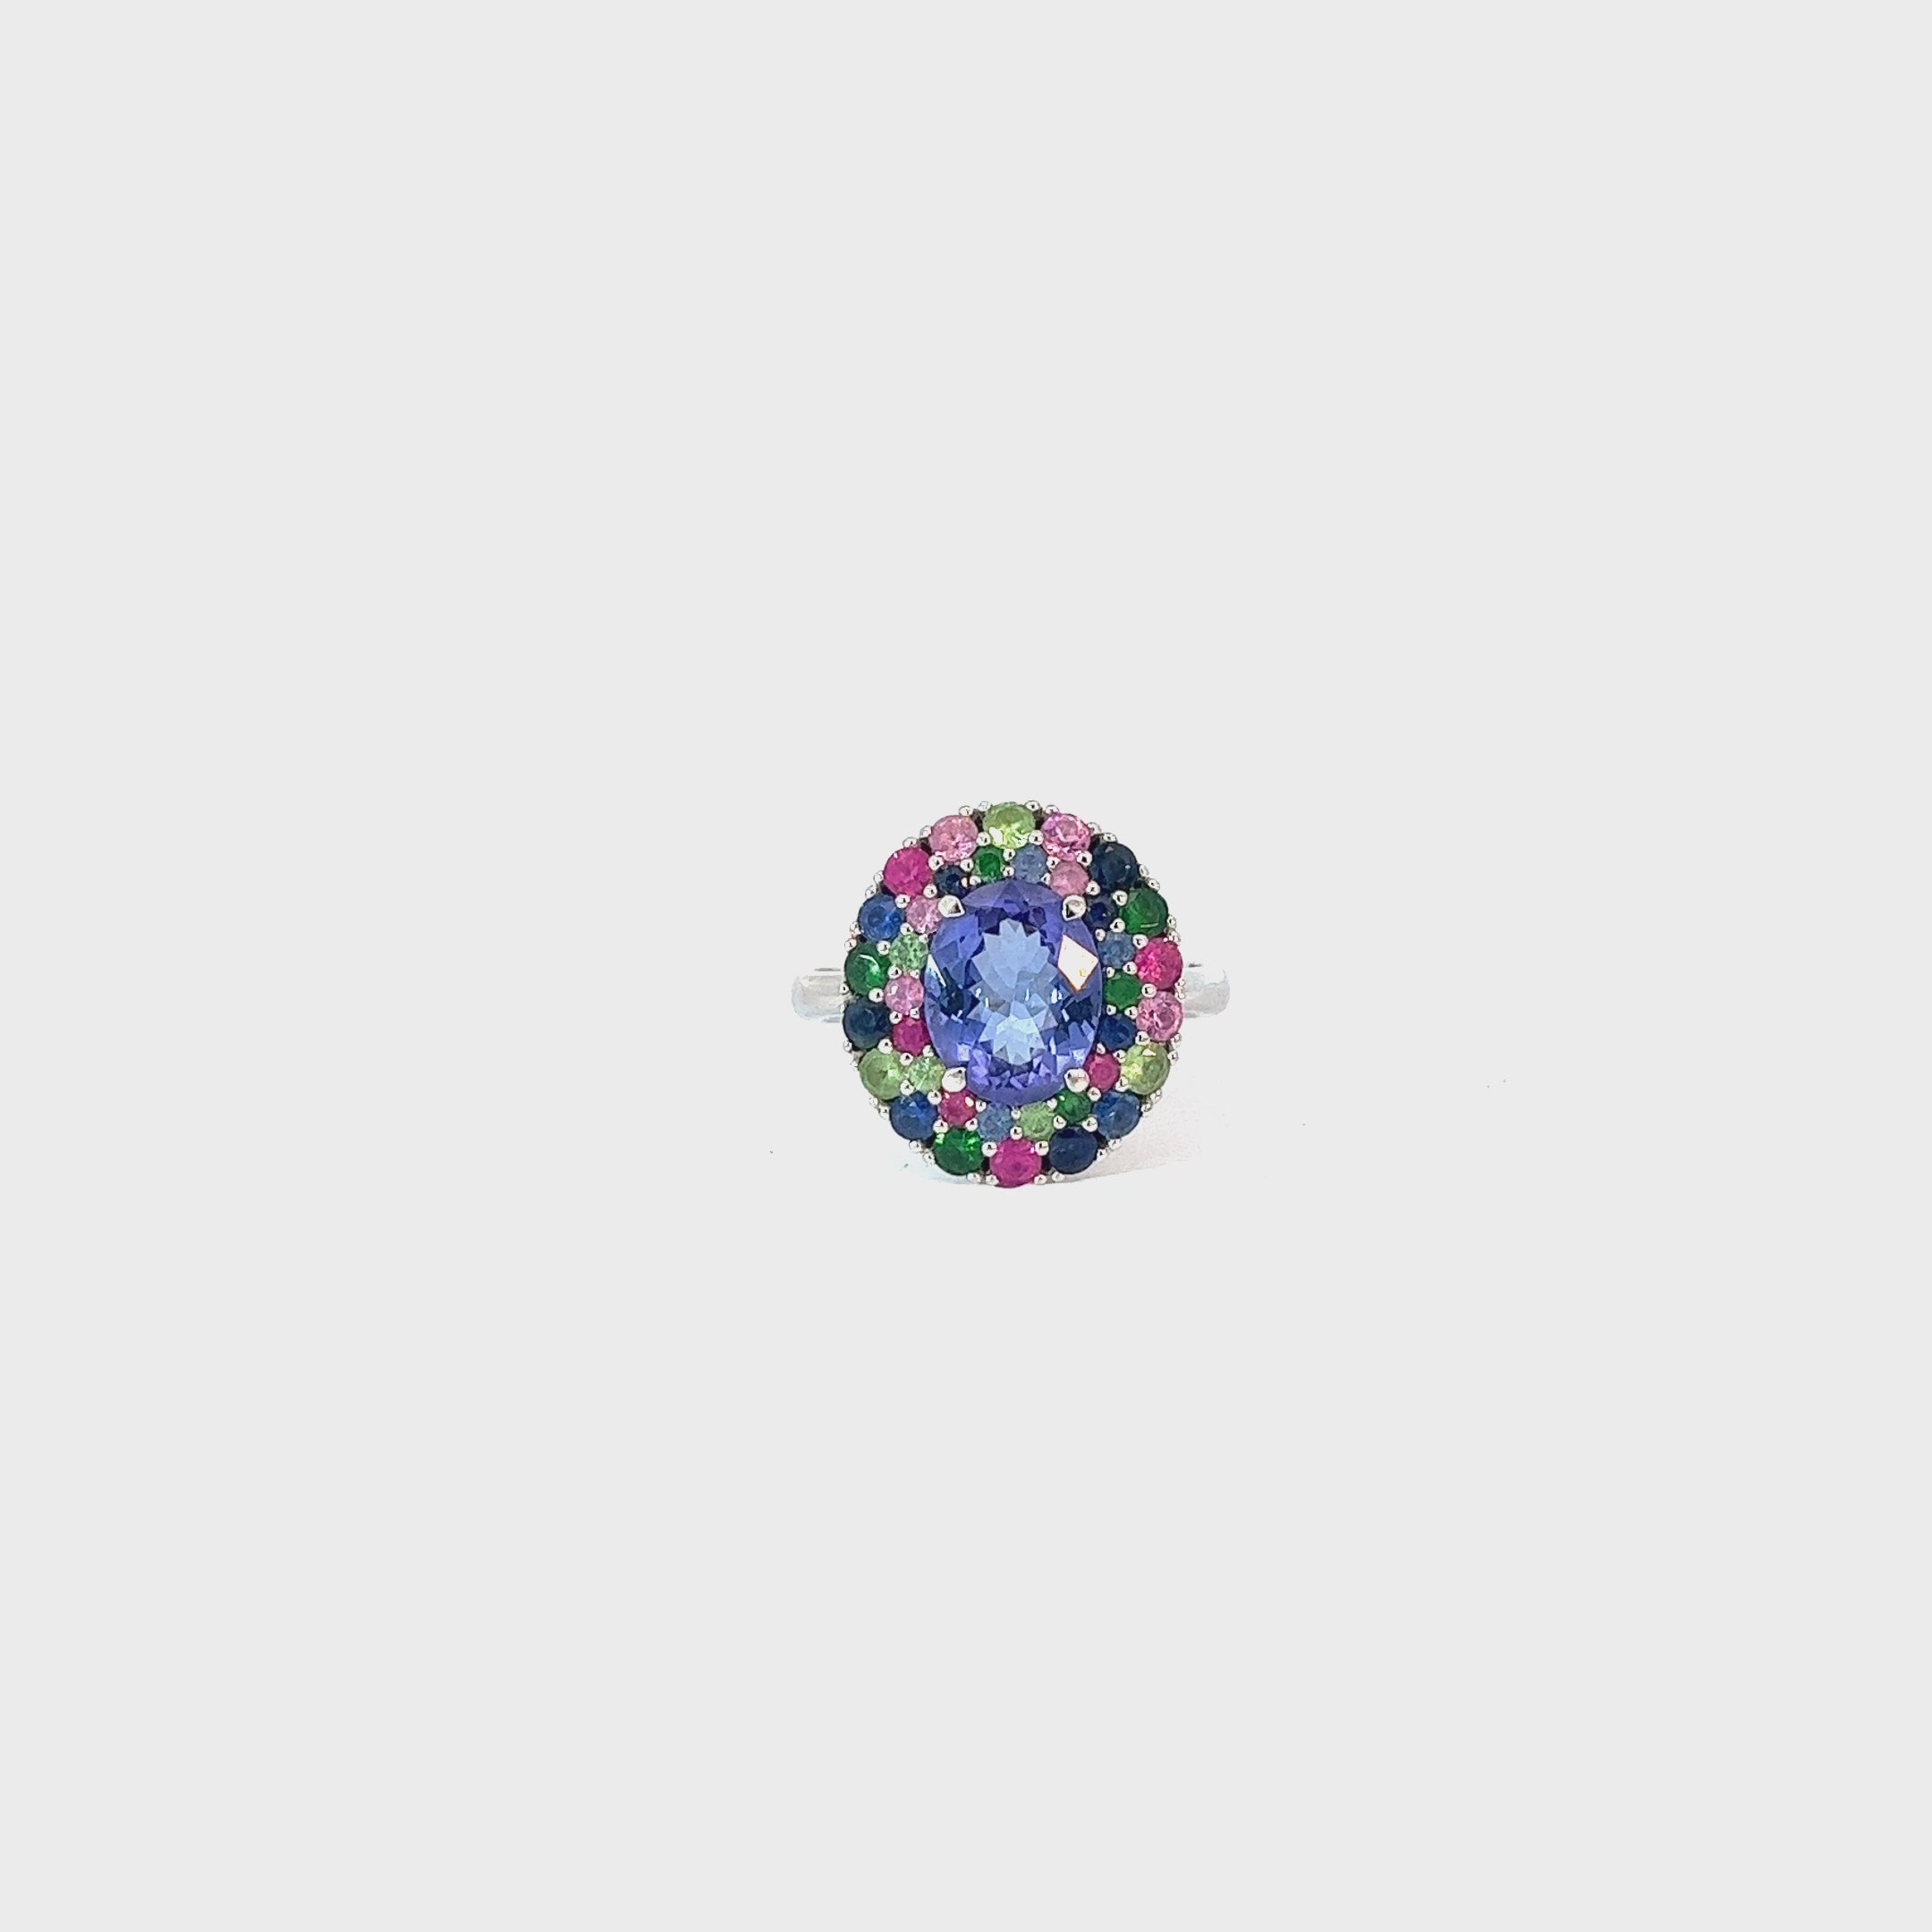 Ladies 18k white gold Tanzanite and multicolored Sapphire ring